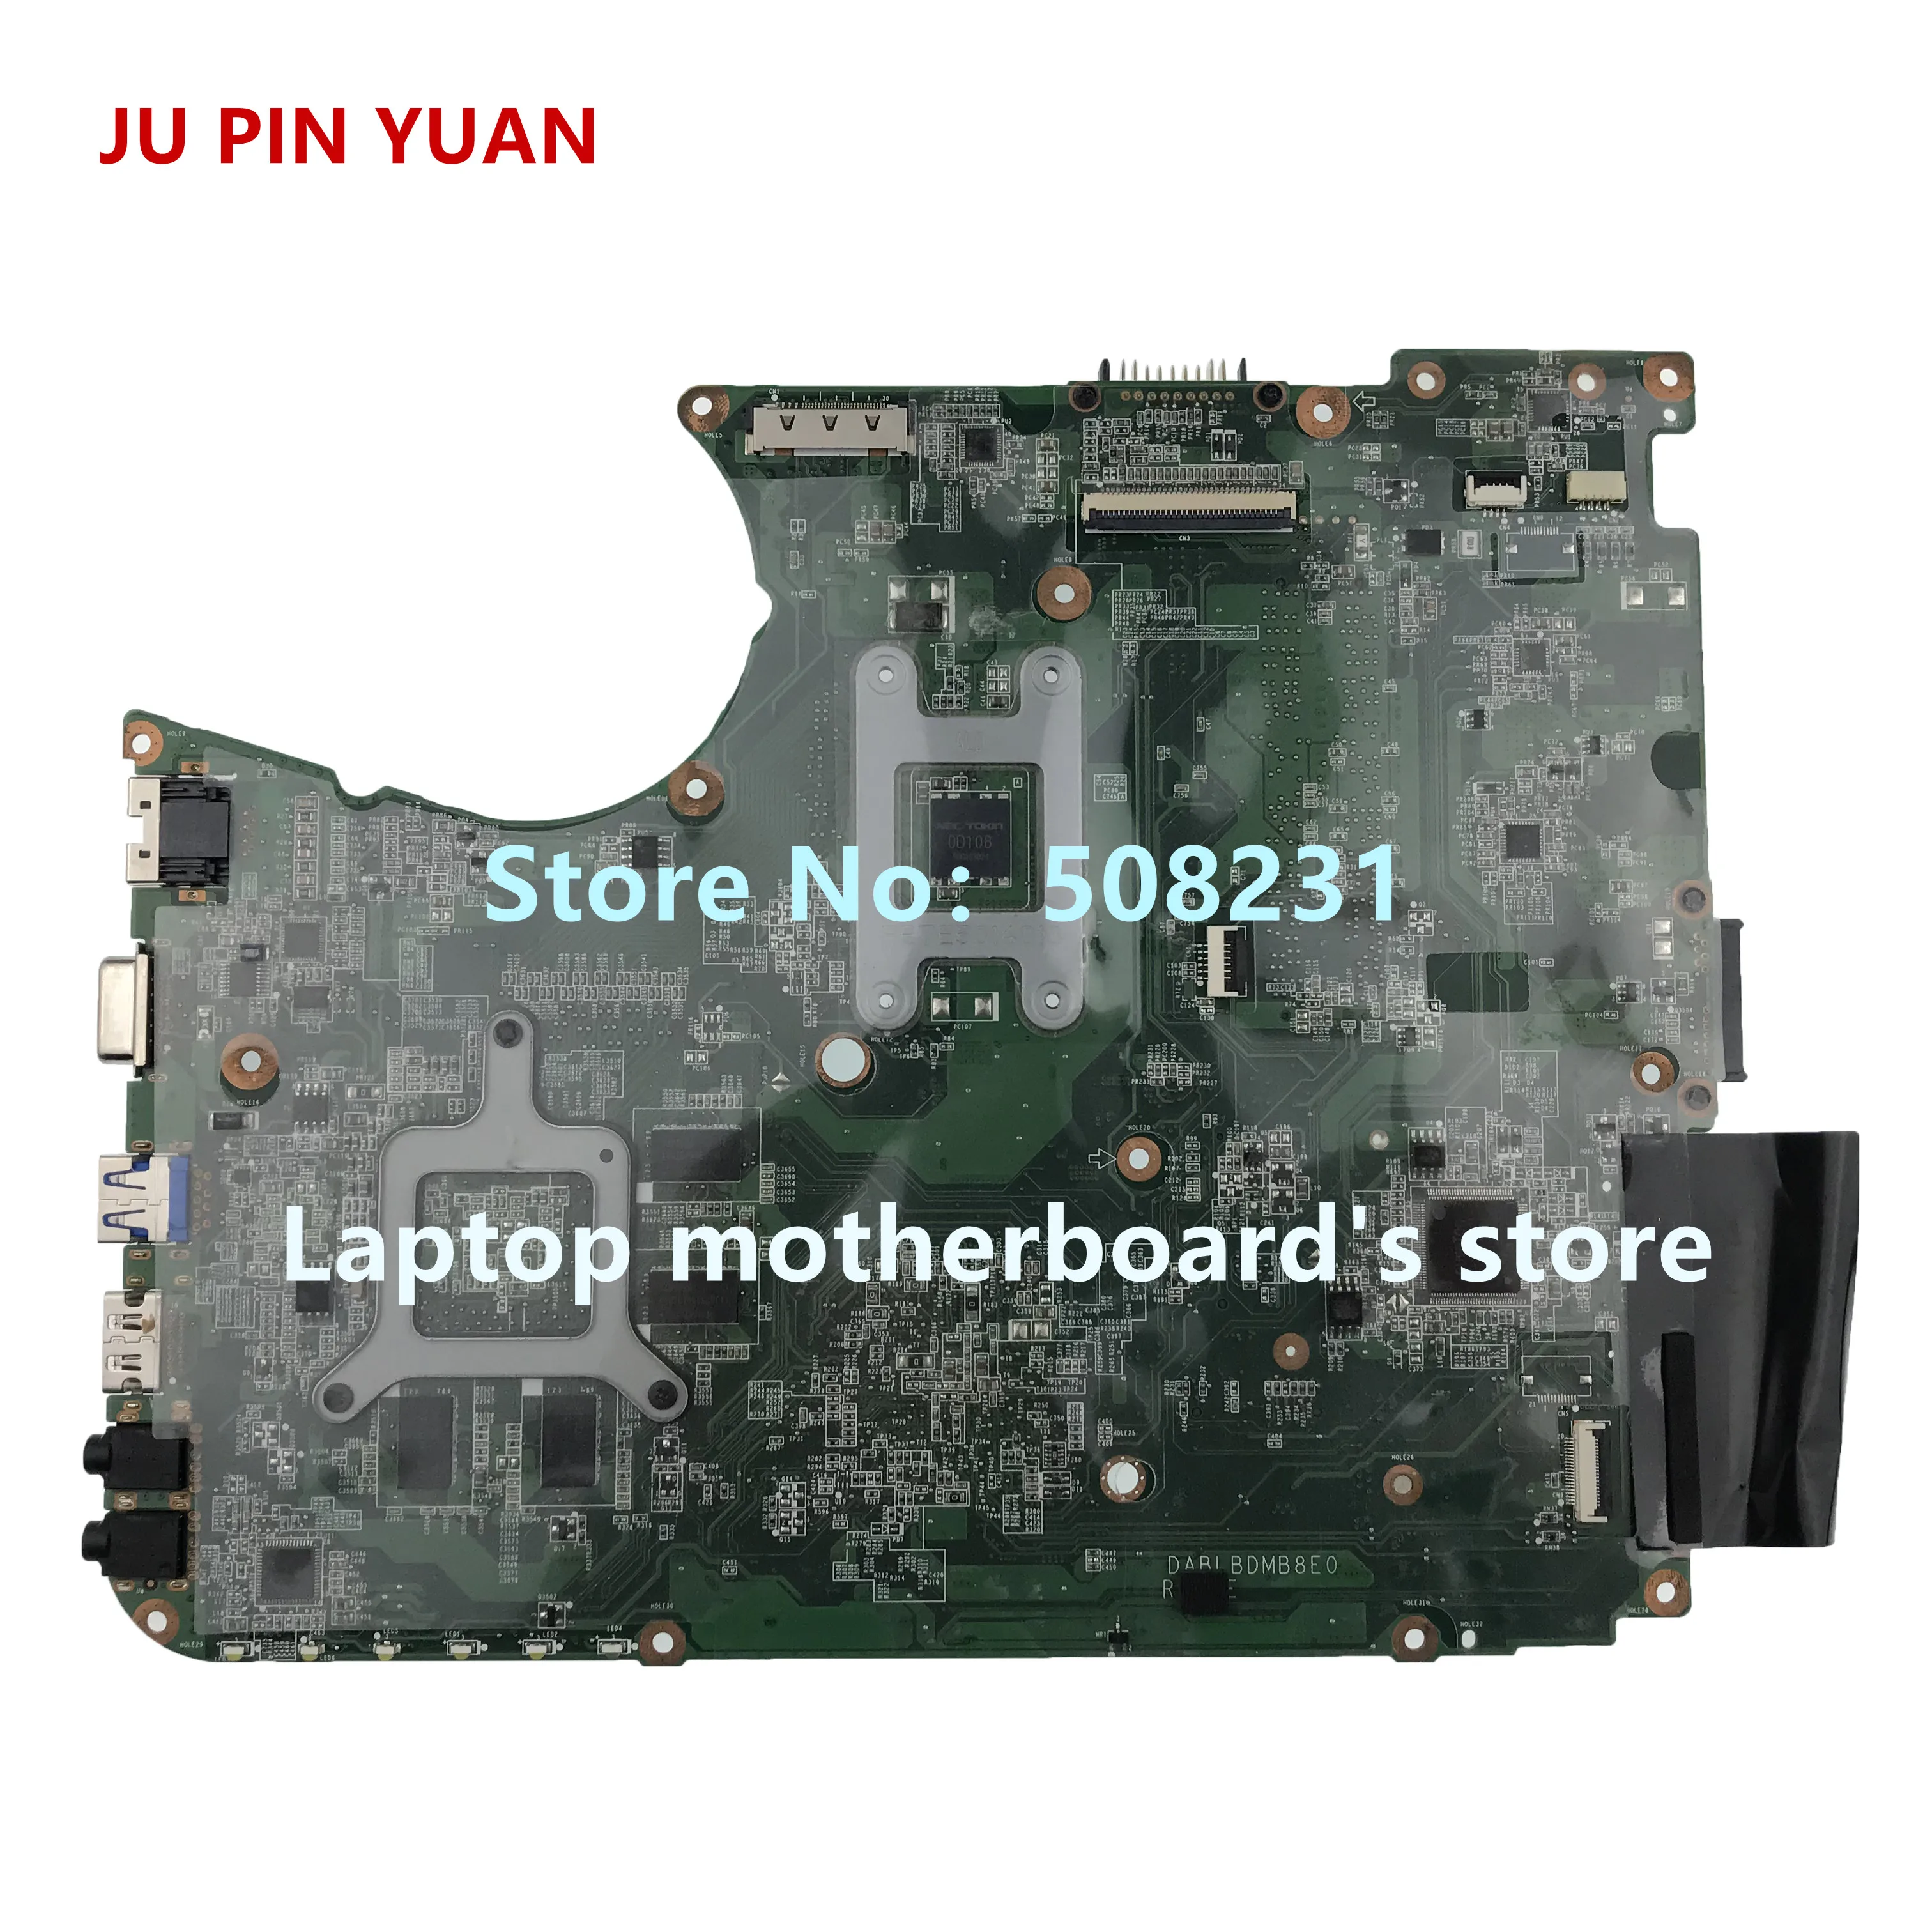 Ju pin yuan  toshiba satellite L750 L755     A000080820 dblbdmb8e0 GT525M 1  100%